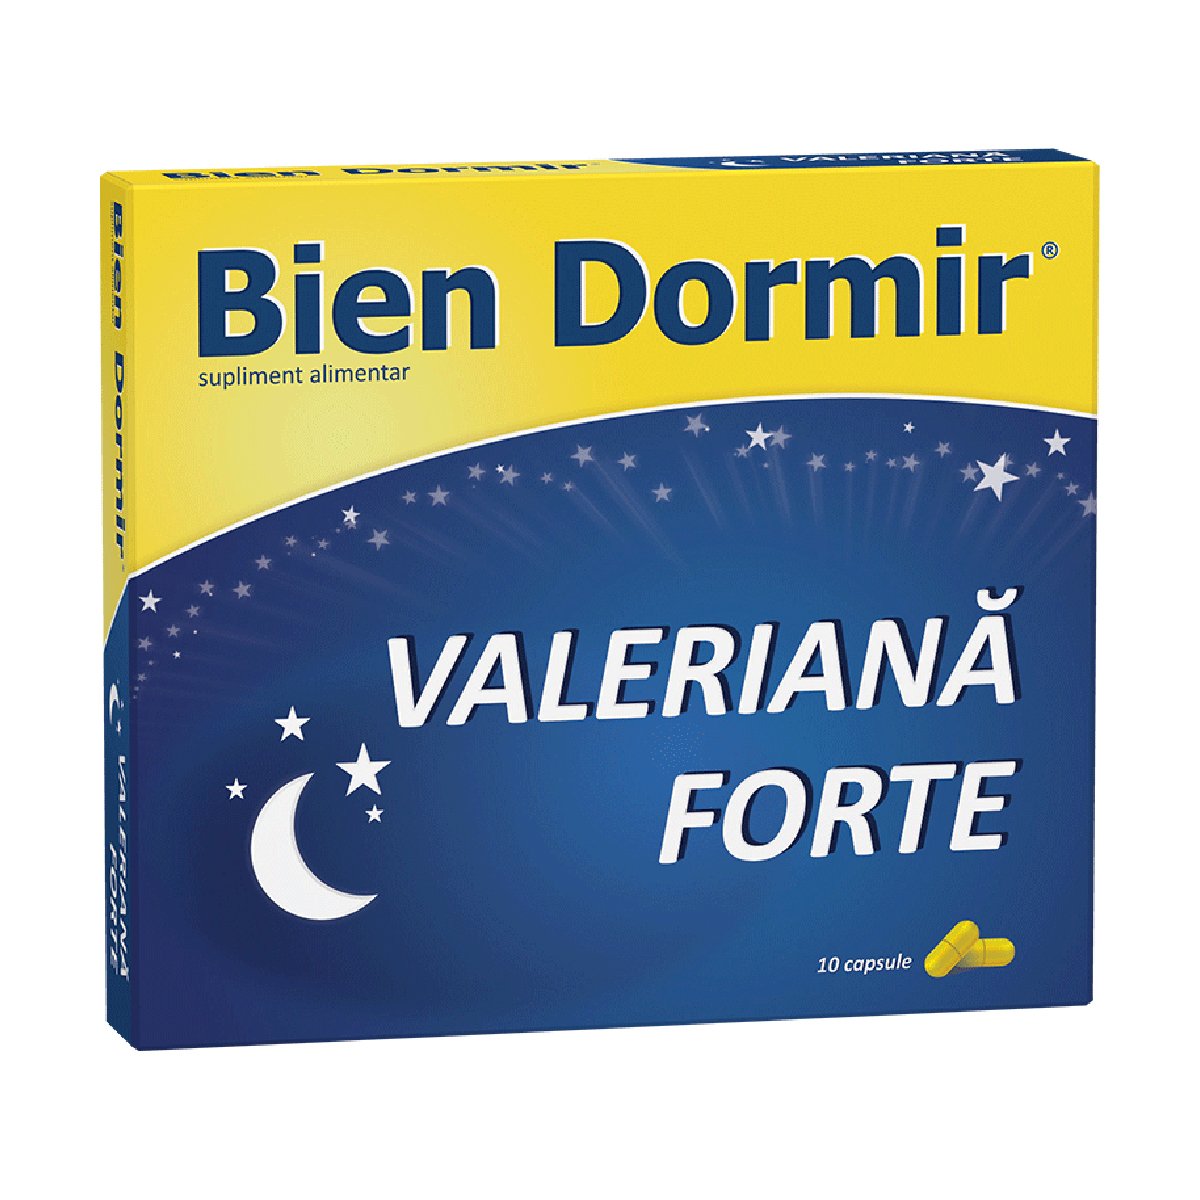 Bien Dormir + Valeriana forte, 10 capsule Bien imagine 2022